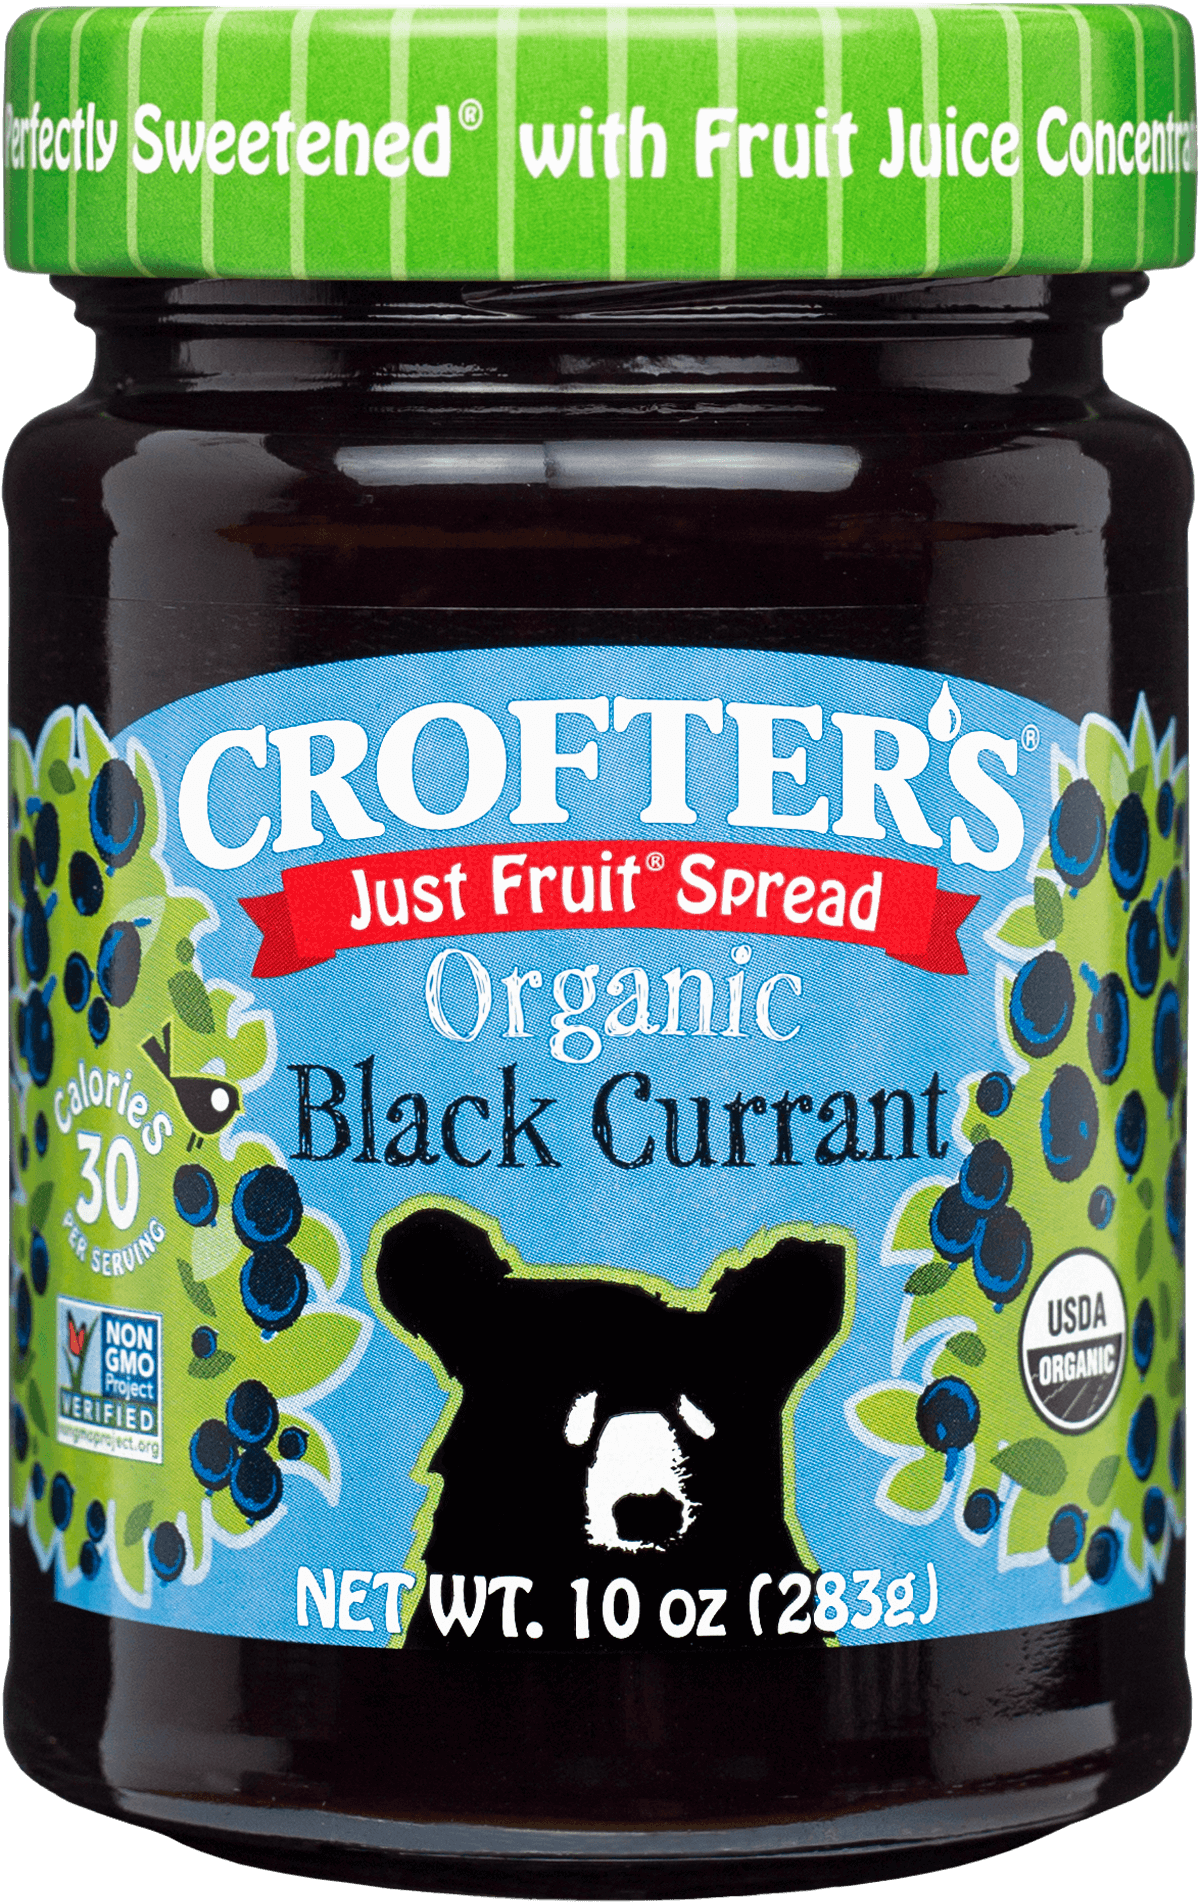 Just Fruit Black Currant Spread